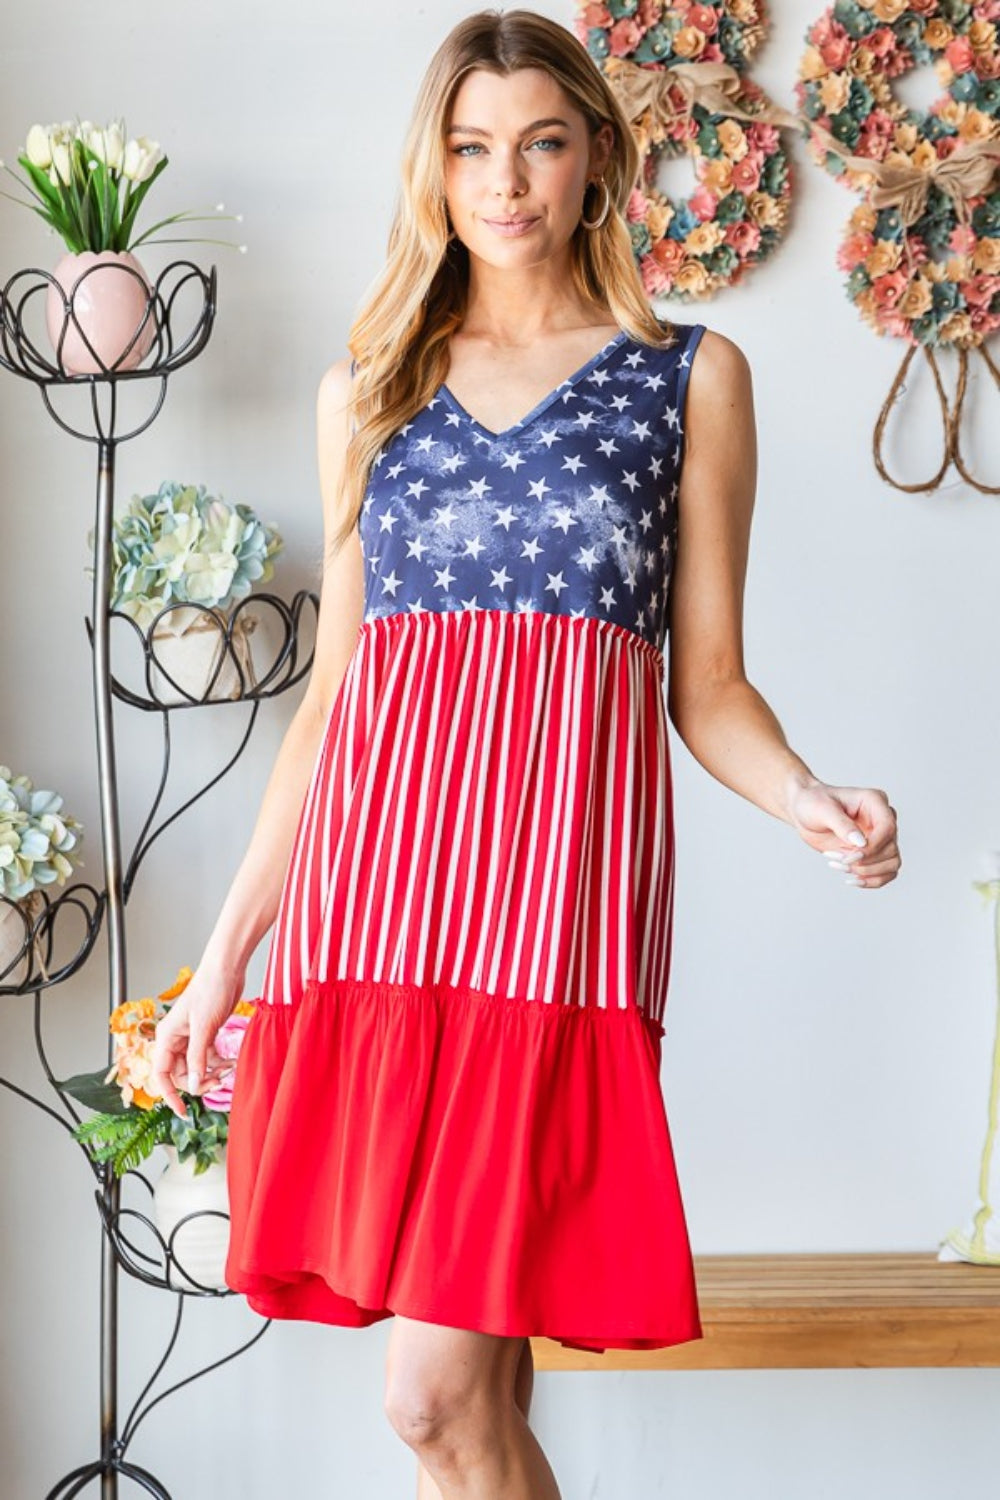 Heimish Full Size US Flag Theme Contrast Tank Dress  | KIKI COUTURE